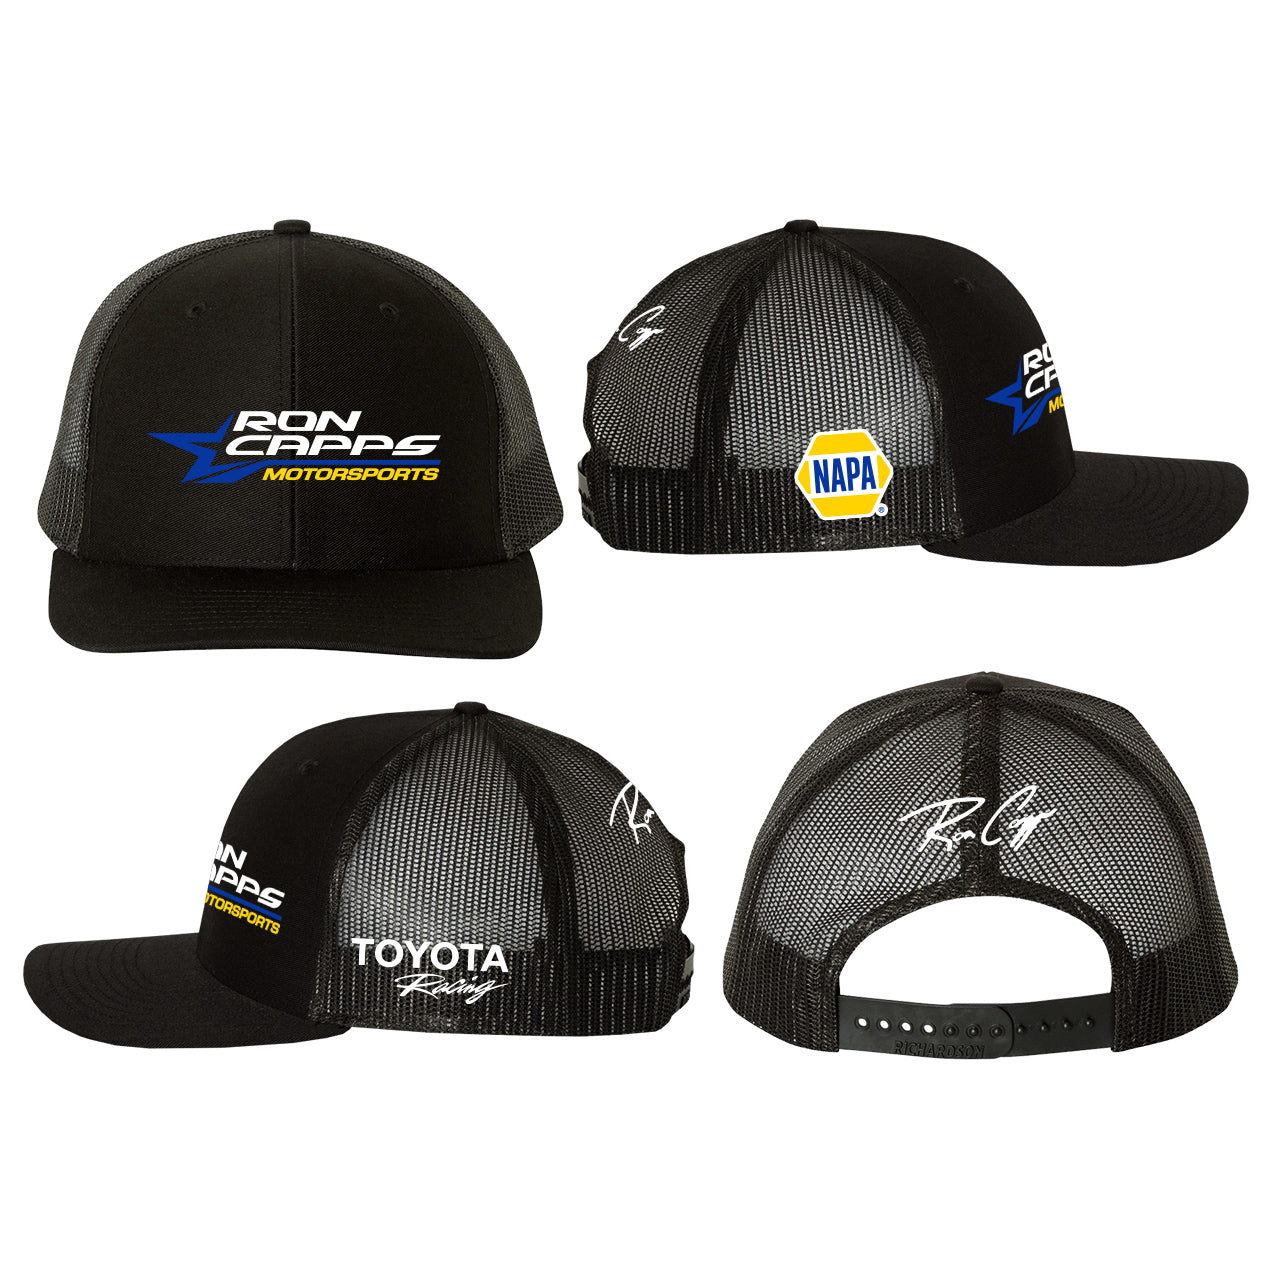 Ron Capps Motorsports Snapback Trucker Hat - Black